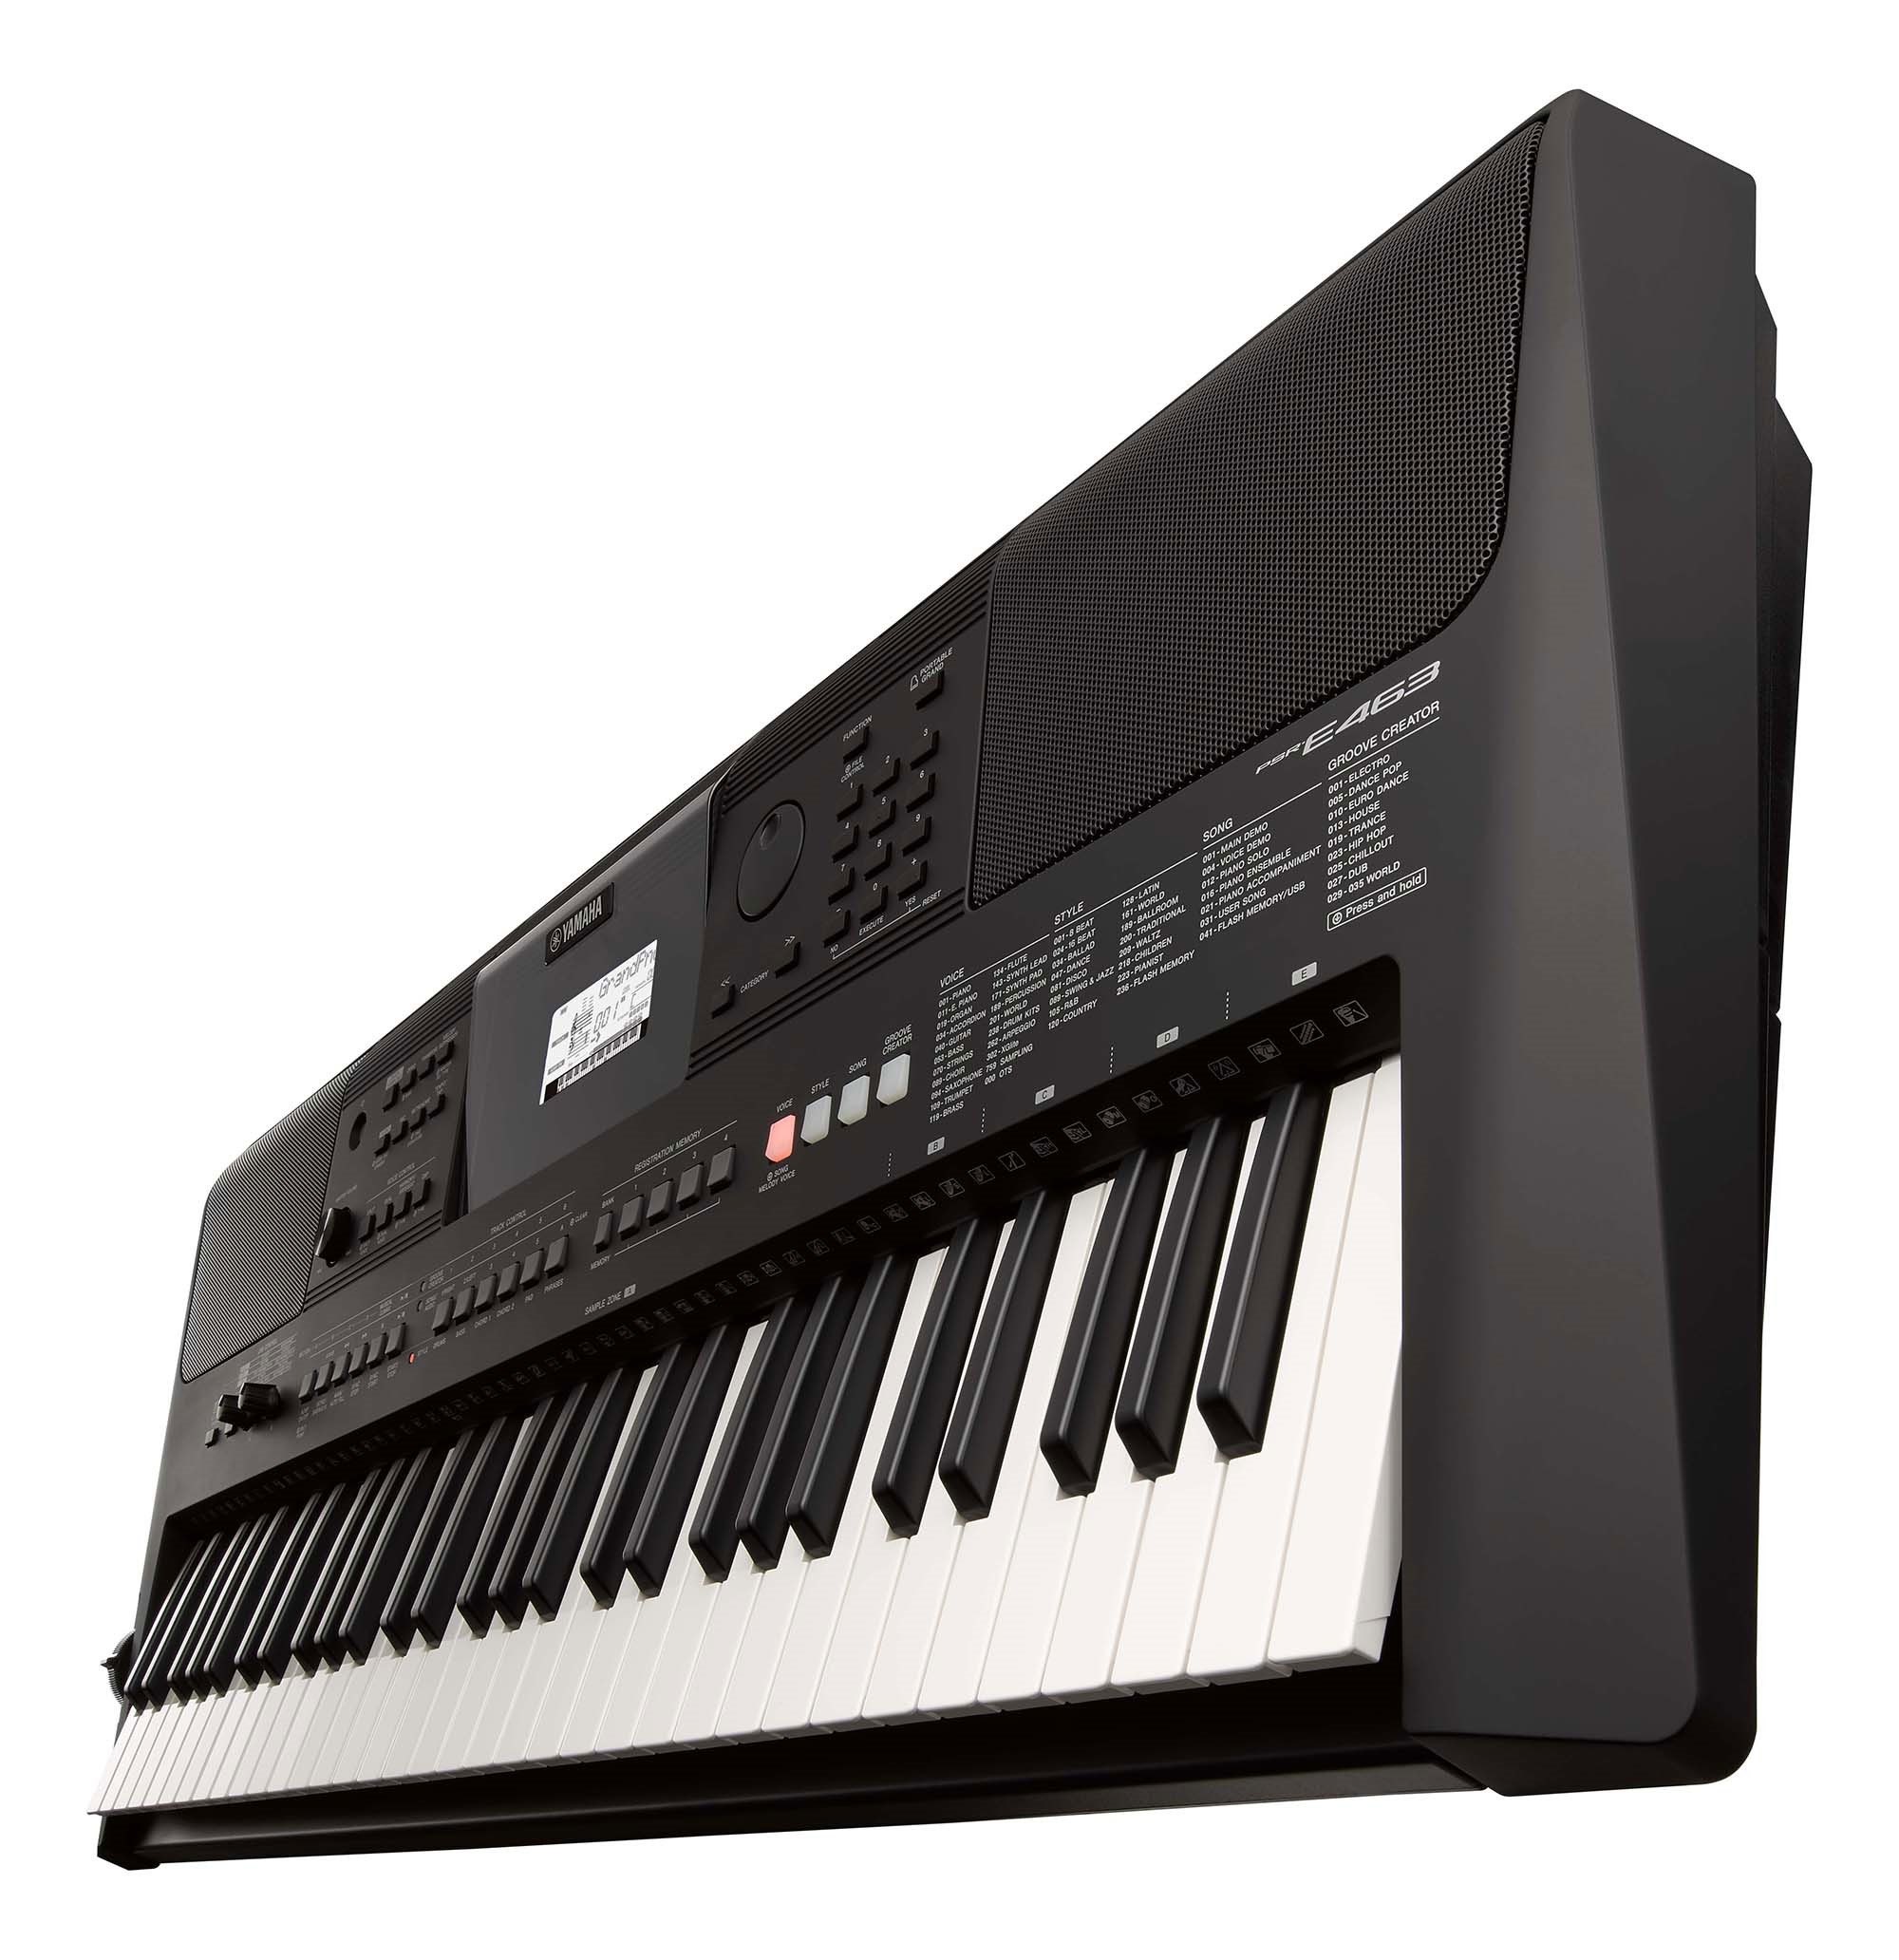 Yamaha 61 Keys Piano Keyboards At Official Online Store India